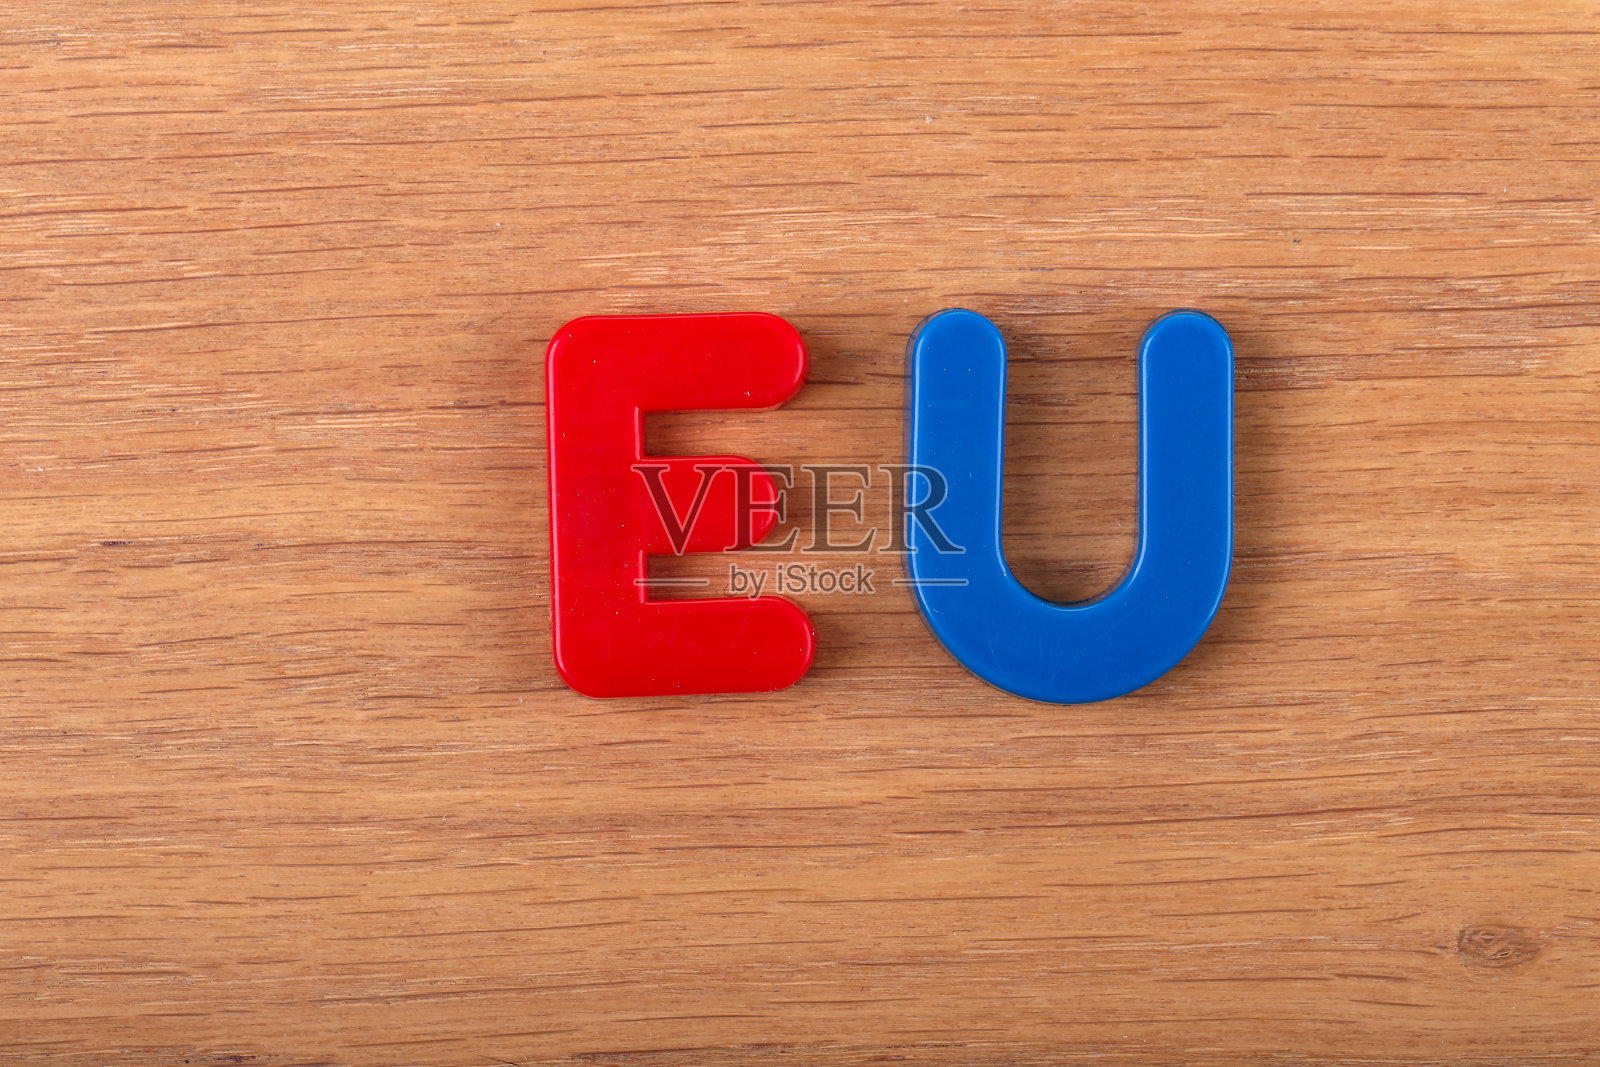 EU这个词是用彩色塑料字母拼出来的照片摄影图片